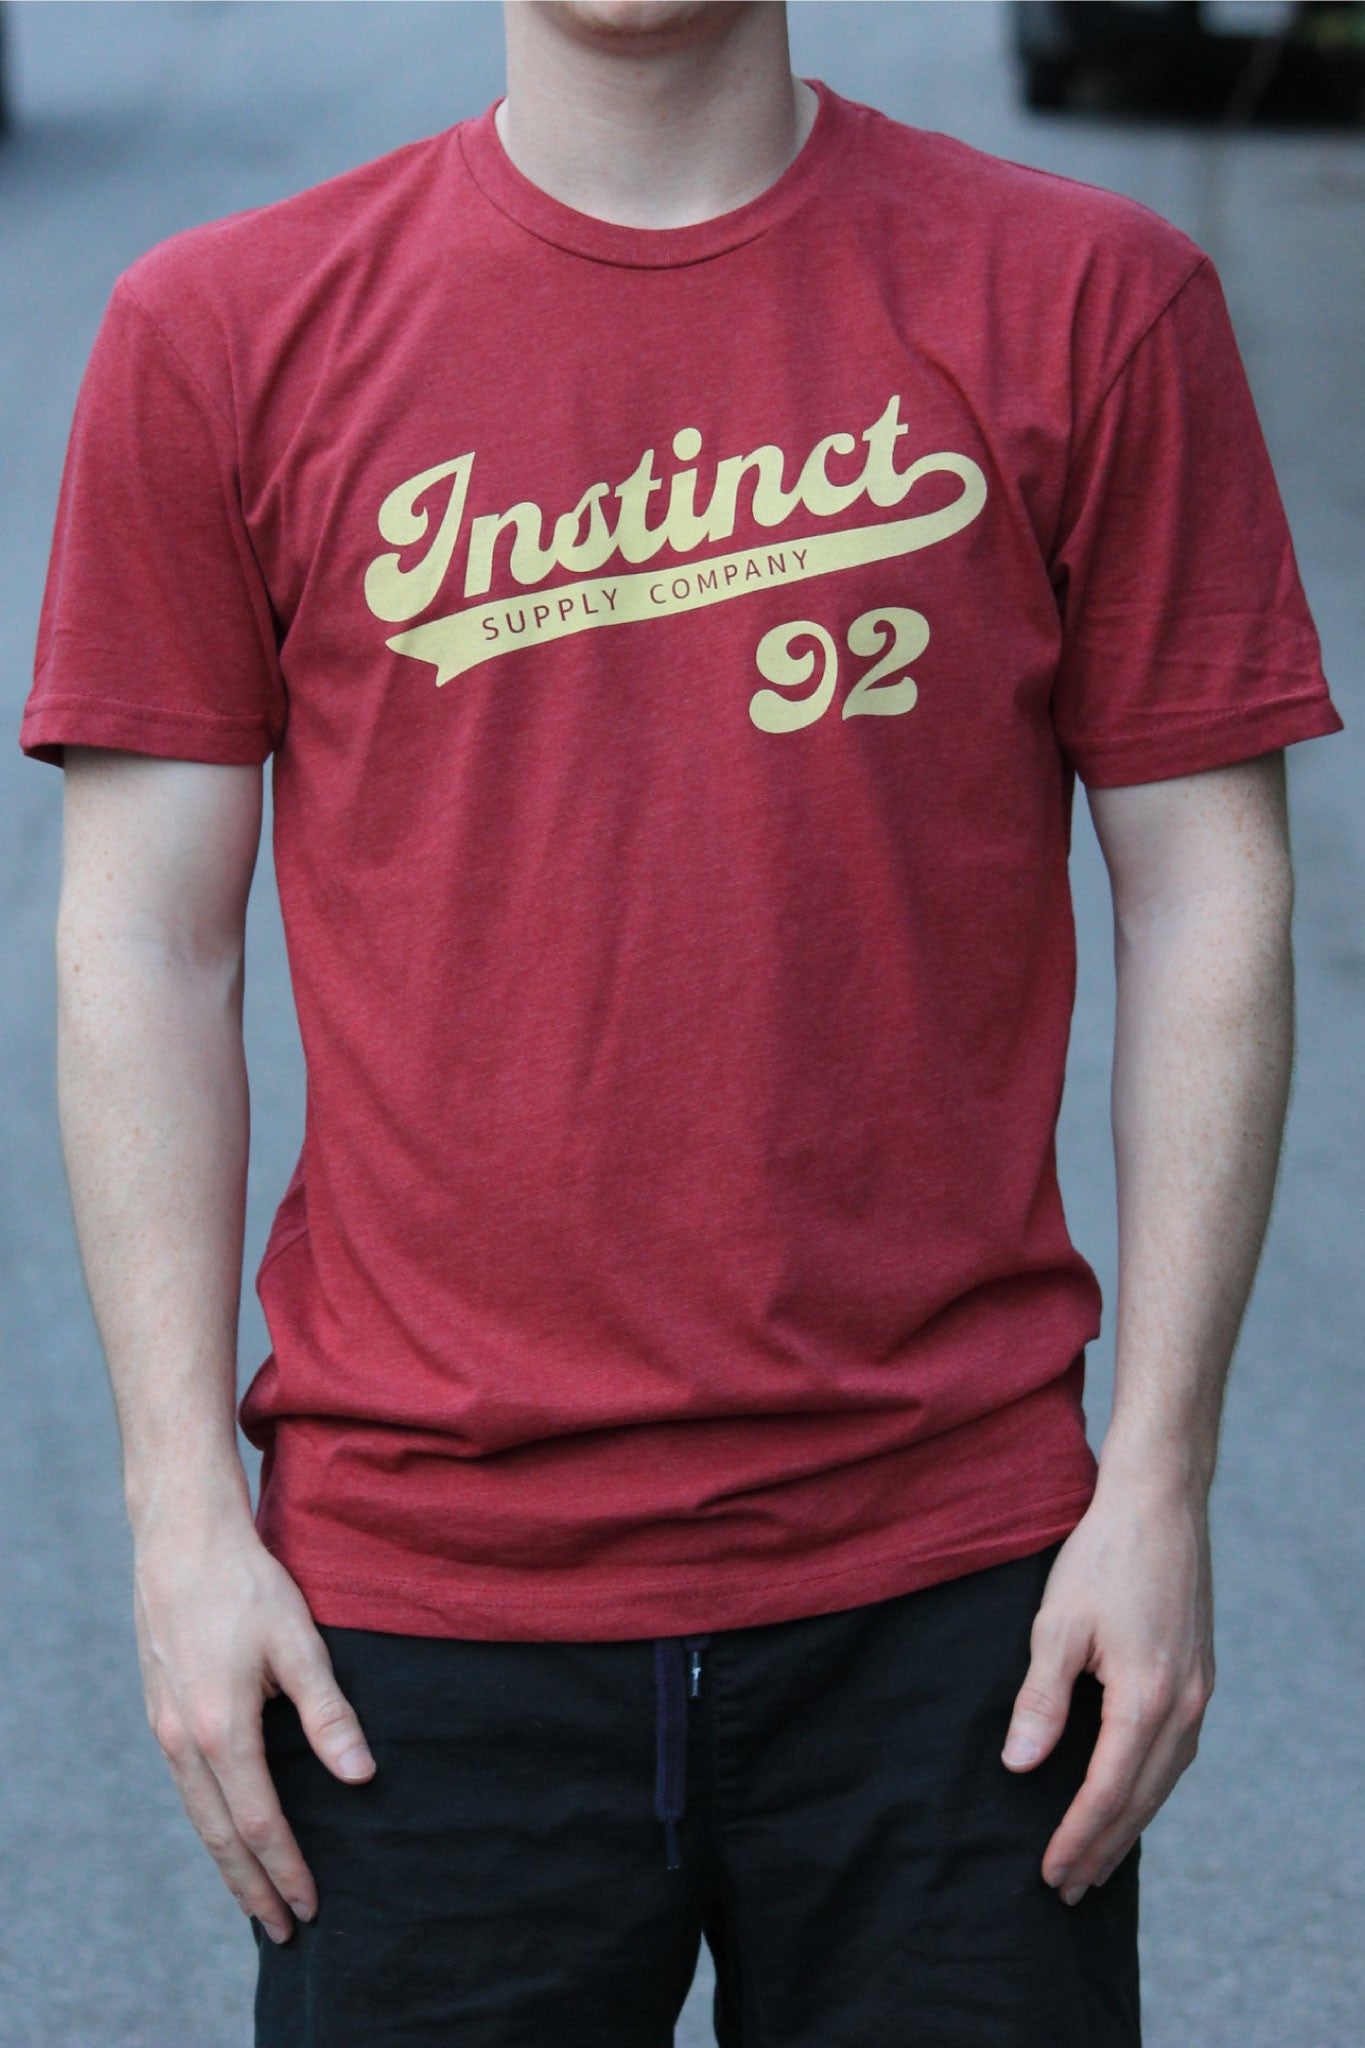 Instinct Supply Company T-Shirt